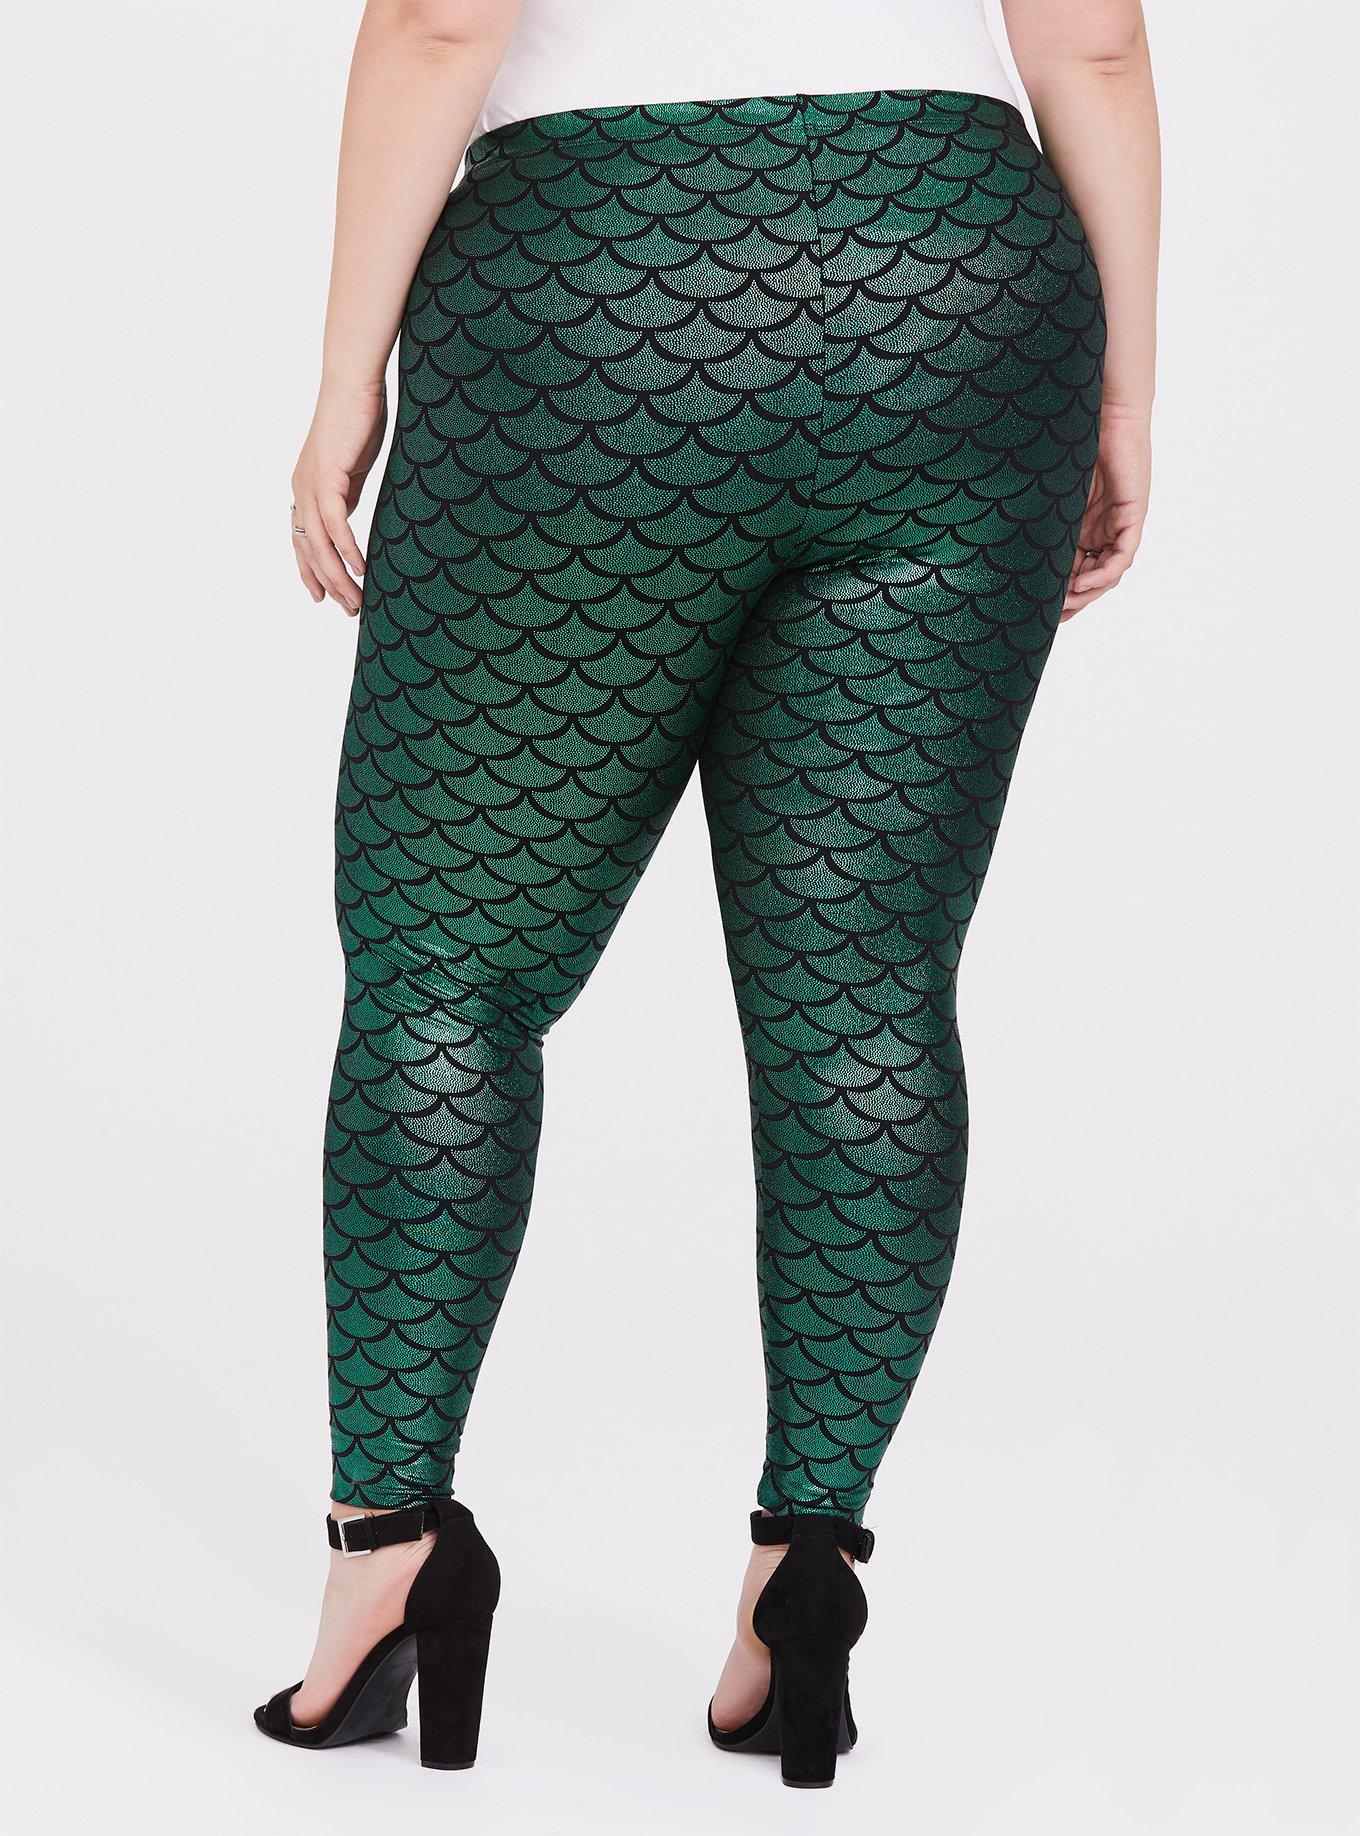 Plus Size - Green Mermaid Scale Legging - Torrid